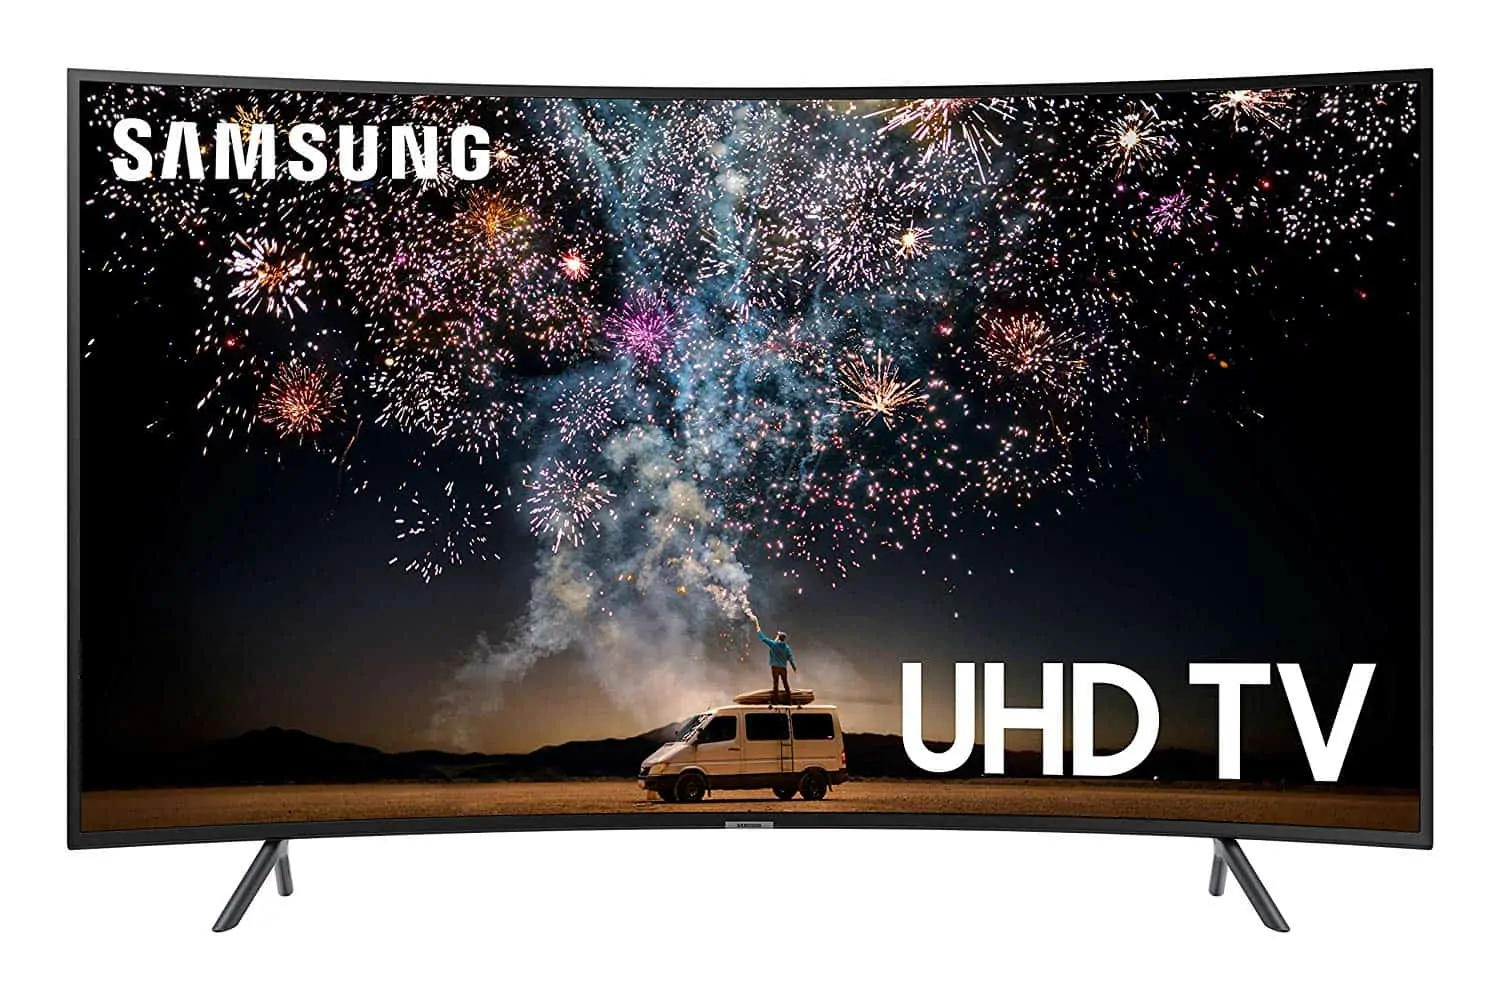 Samsung UN55RU7300FXZA Curved 55-Inch 4K Smart TV - Amazon